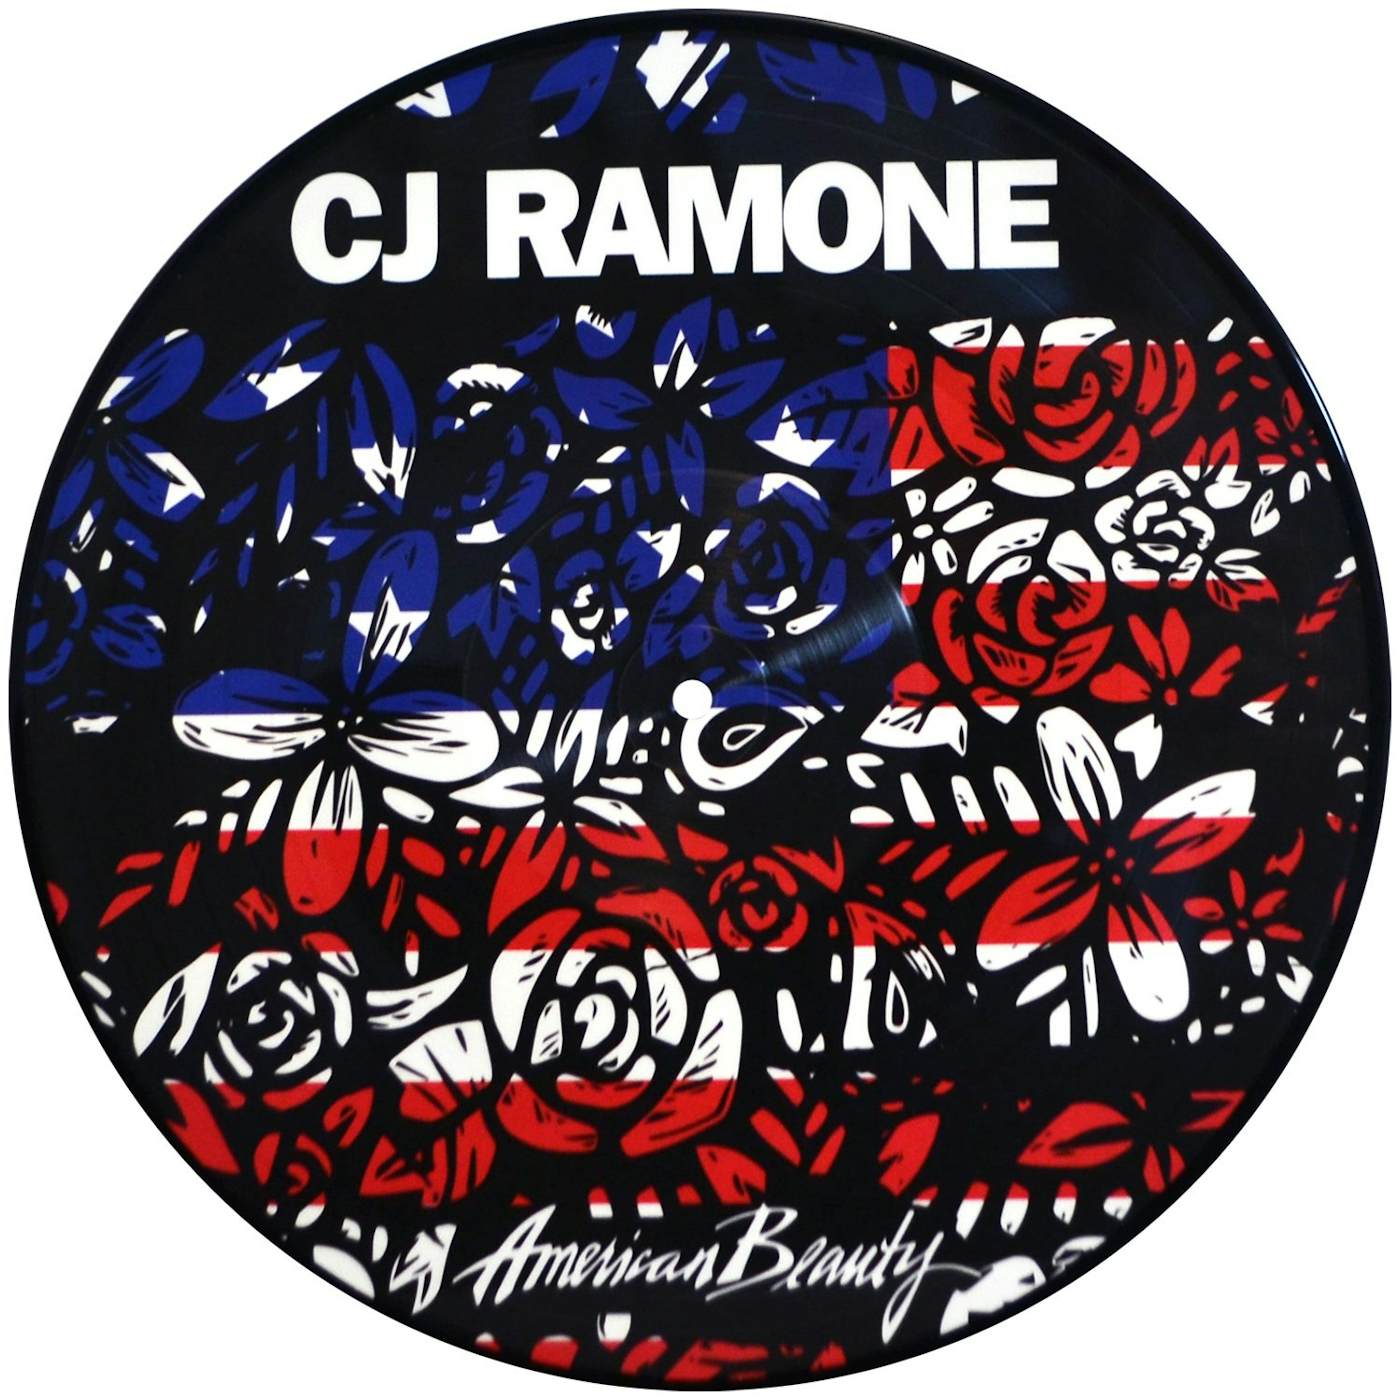 CJ Ramone - American Beauty PD